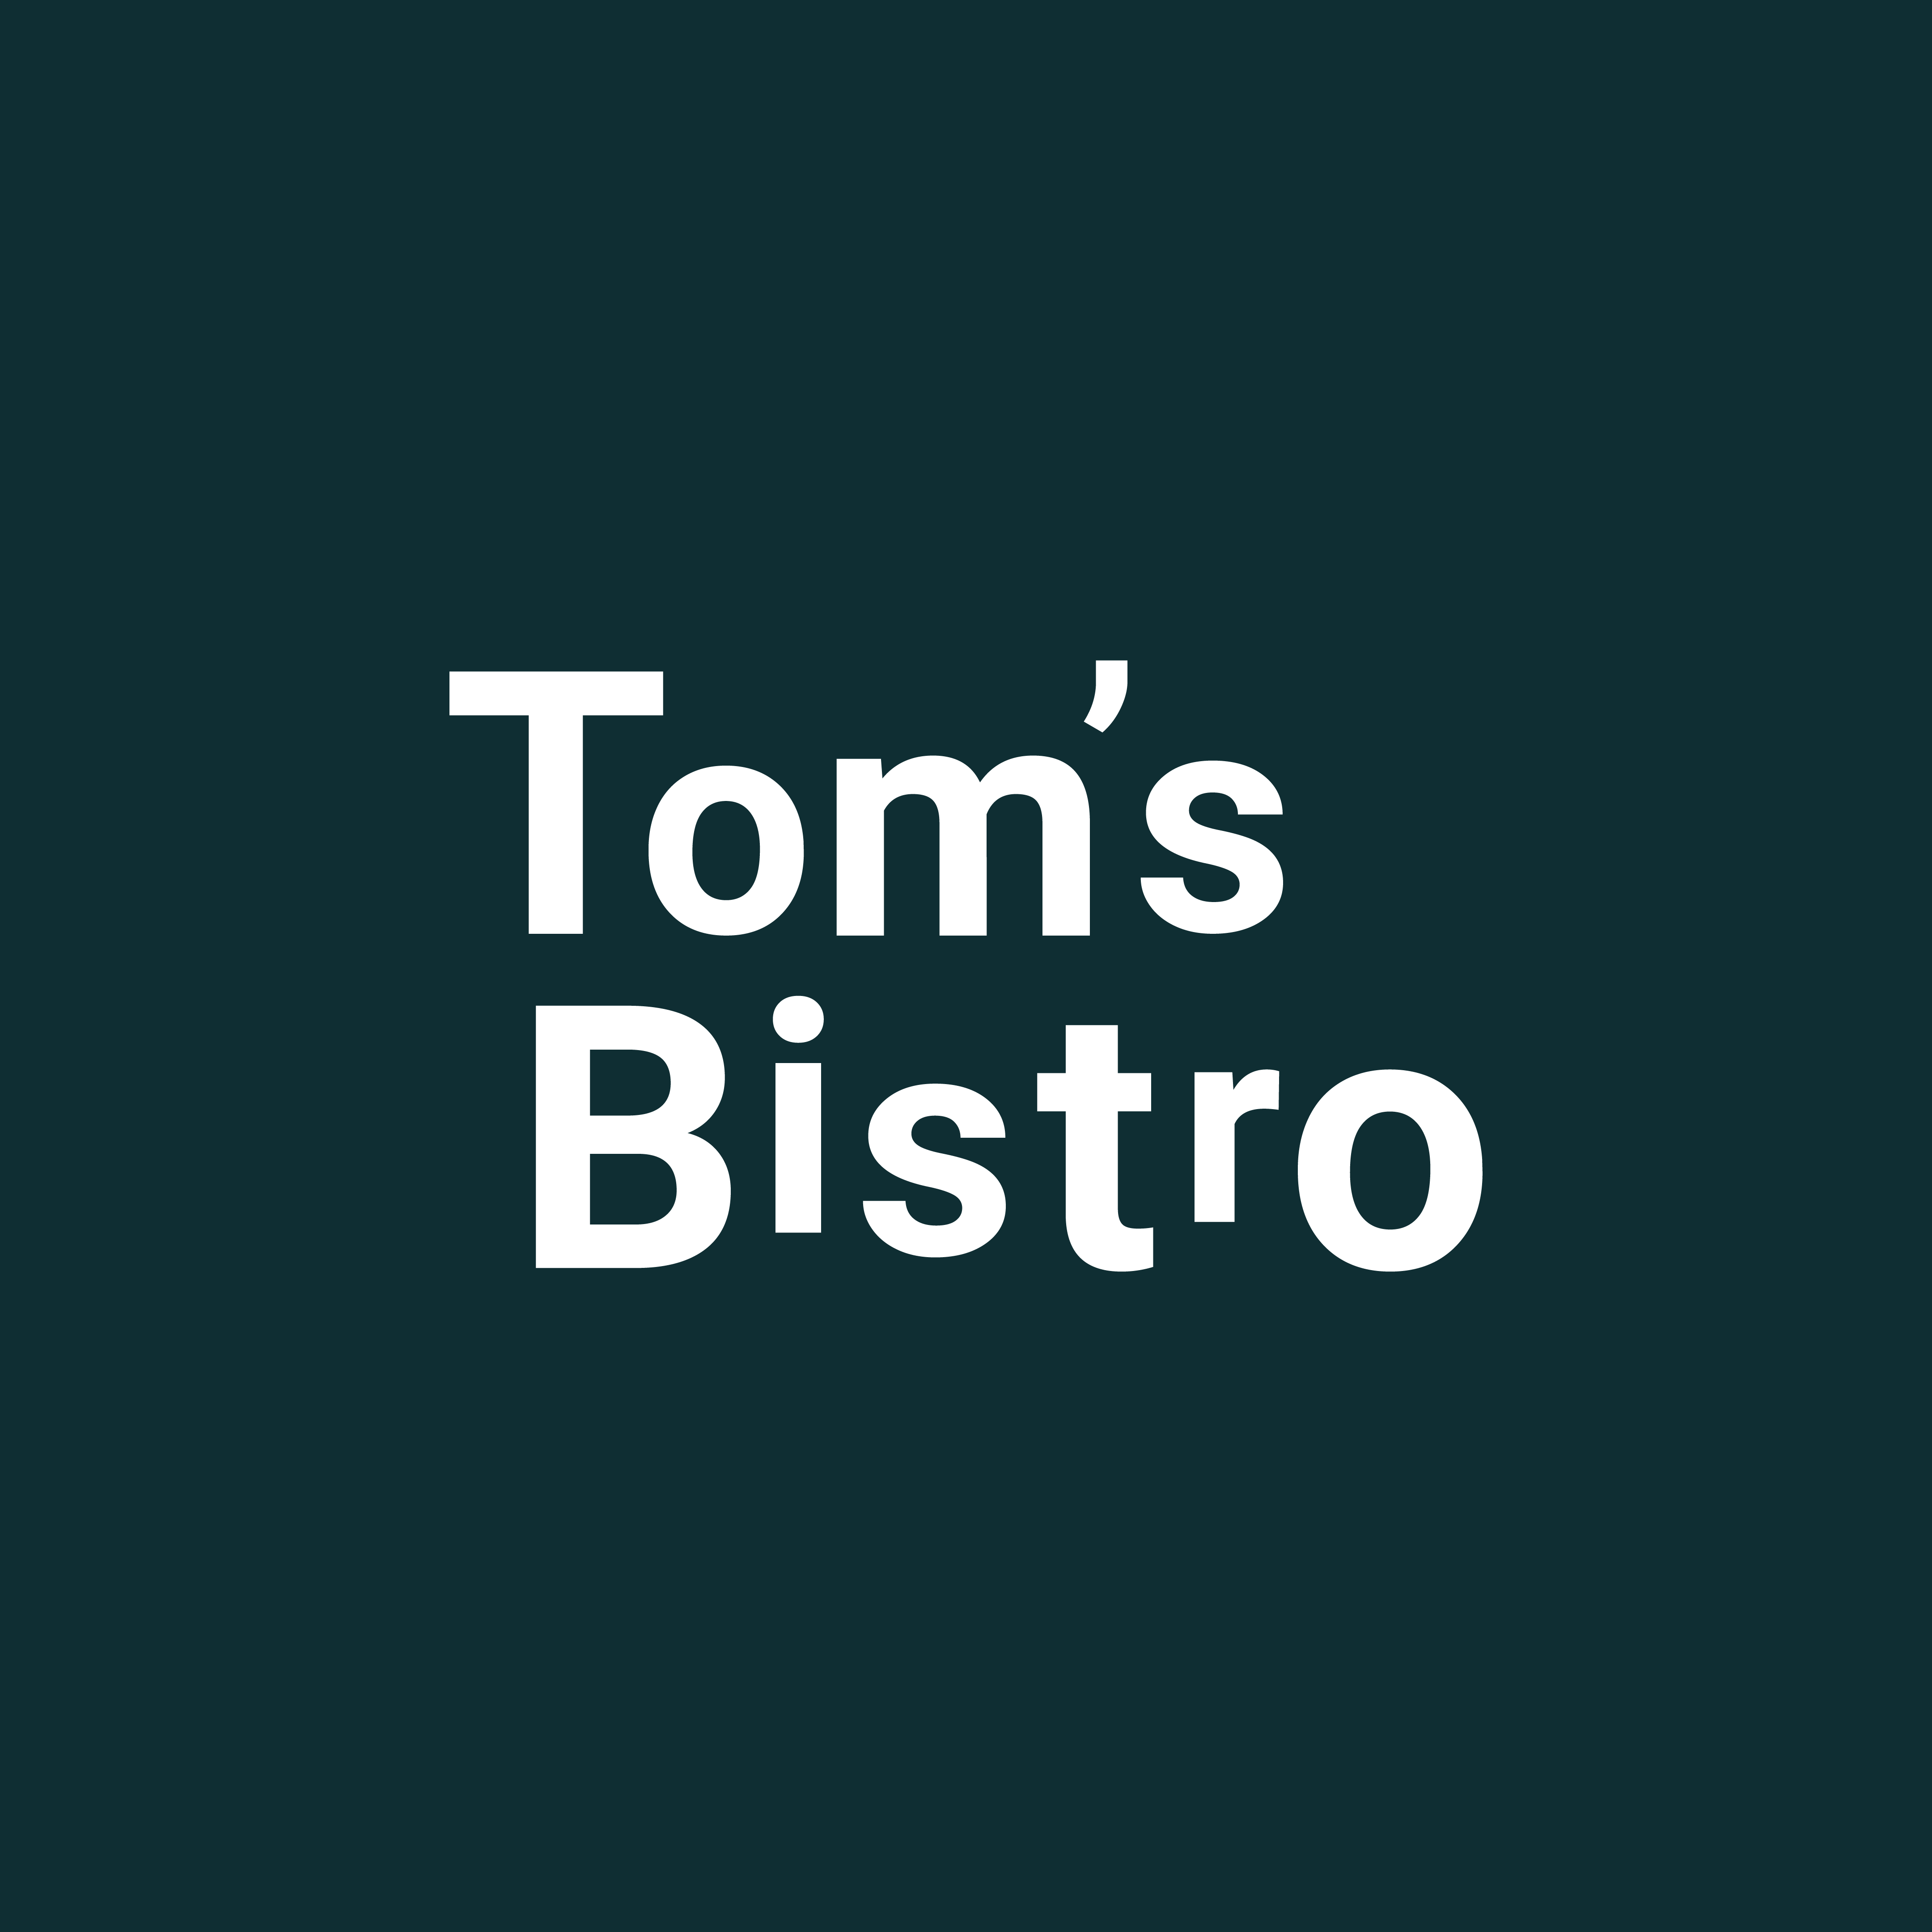 Tom's Bistro Brand Identity